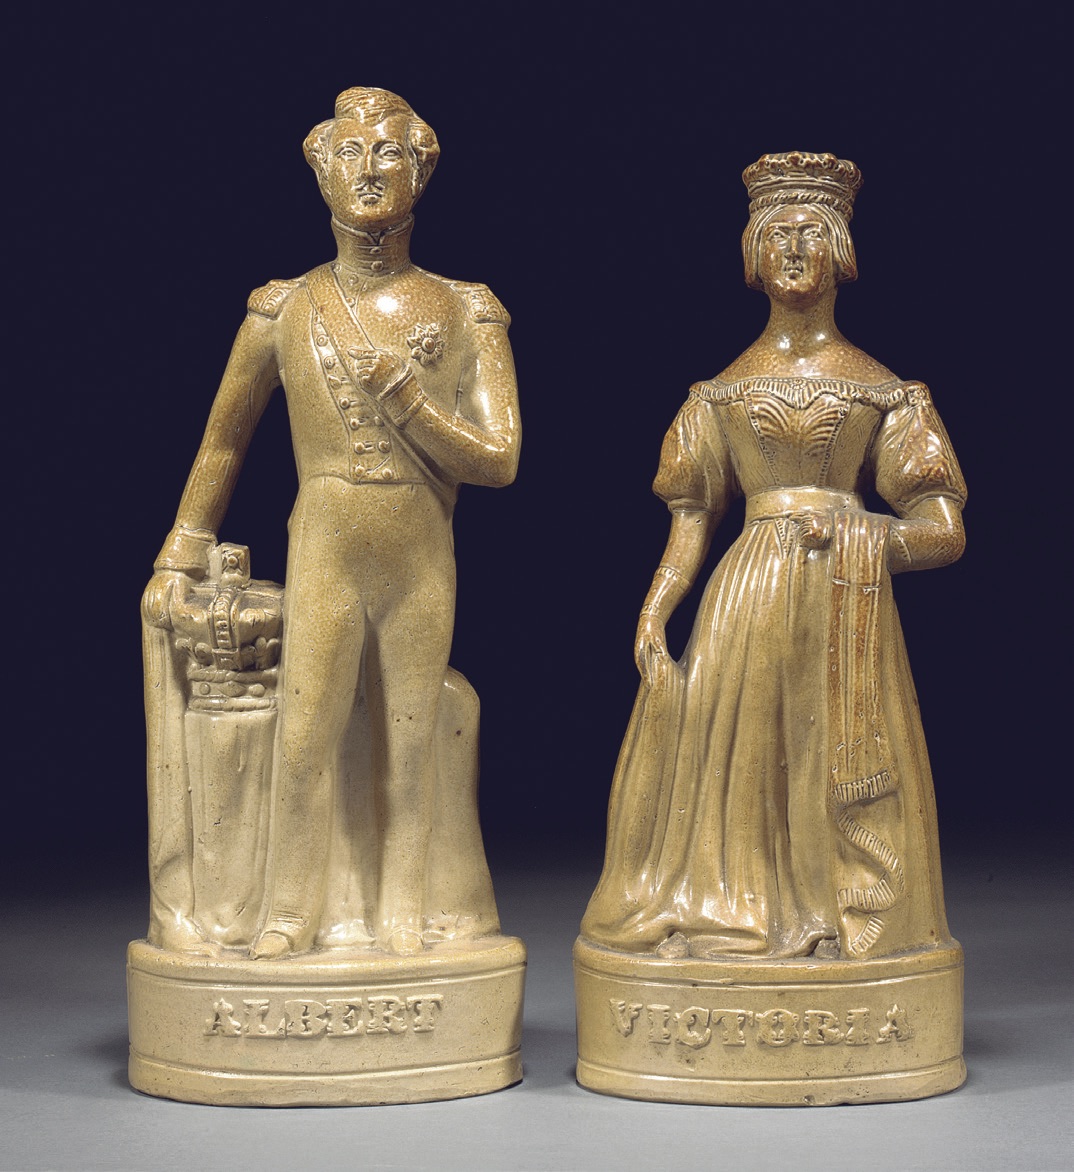 Porcelain figurine of Queen Victoria and Prince Albert